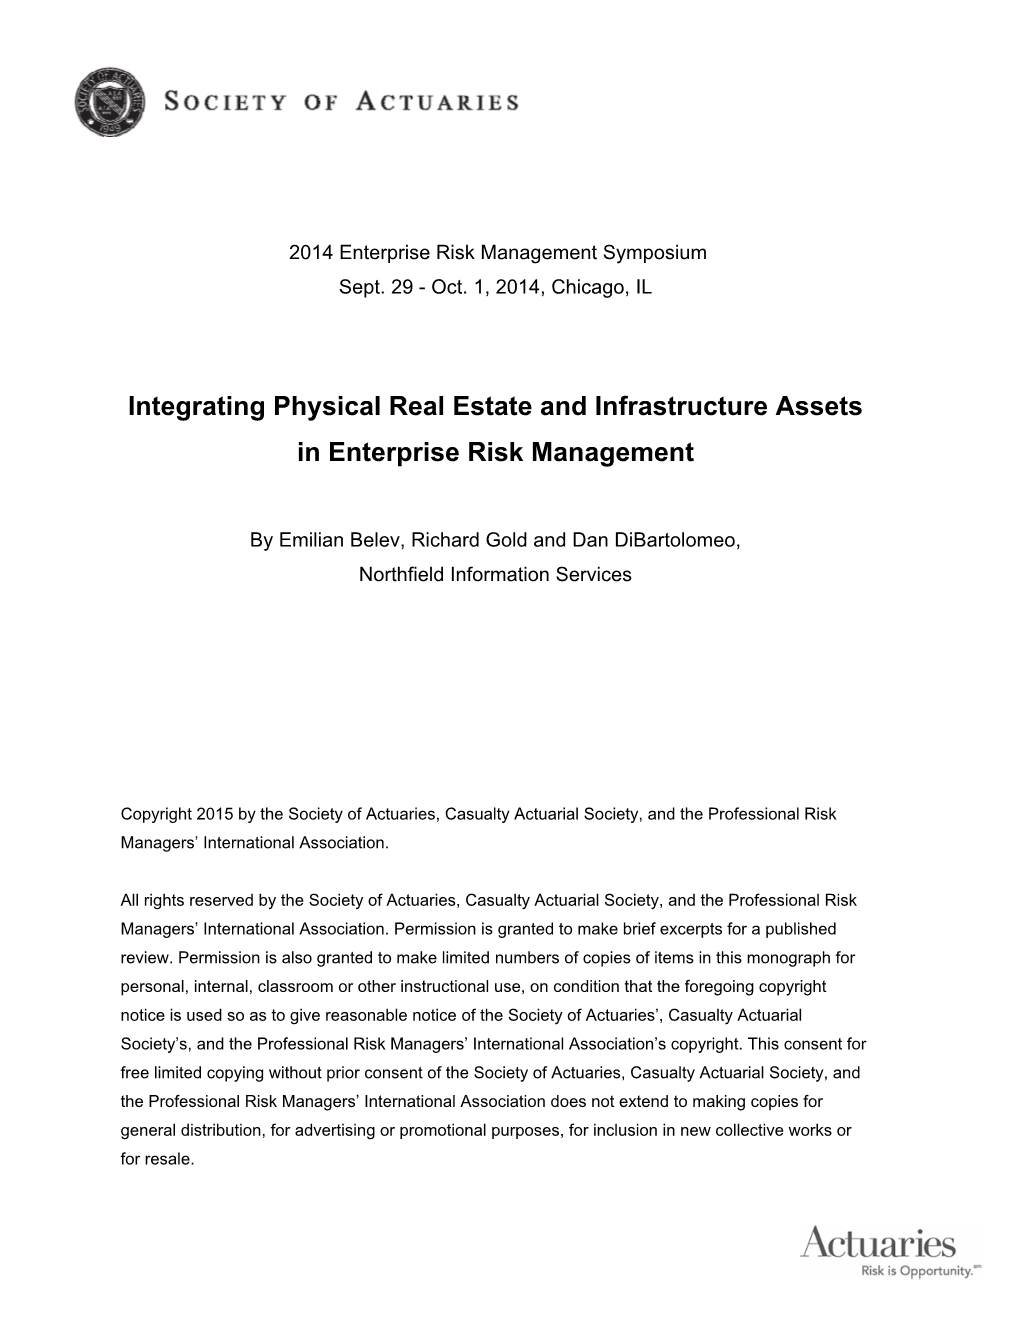 Integrating Physical Real Estate and Infrastructure Assets in Enterprise Risk Management